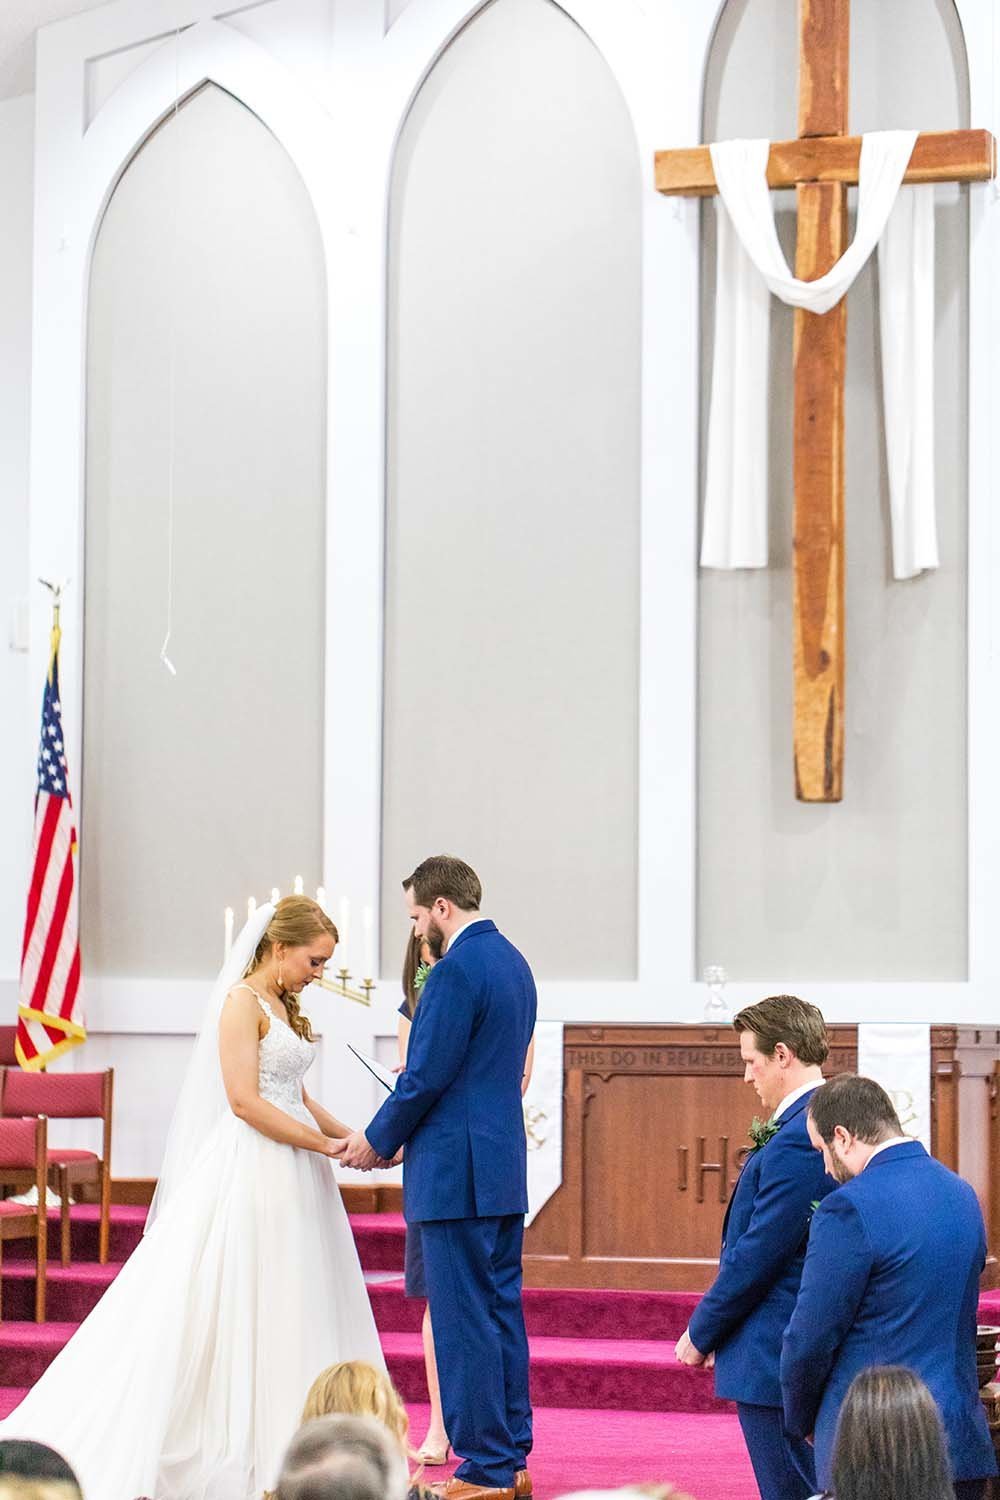 St.-Clairsville-Ohio-Wedding-Church-Ceremony-Couple-With-Cross